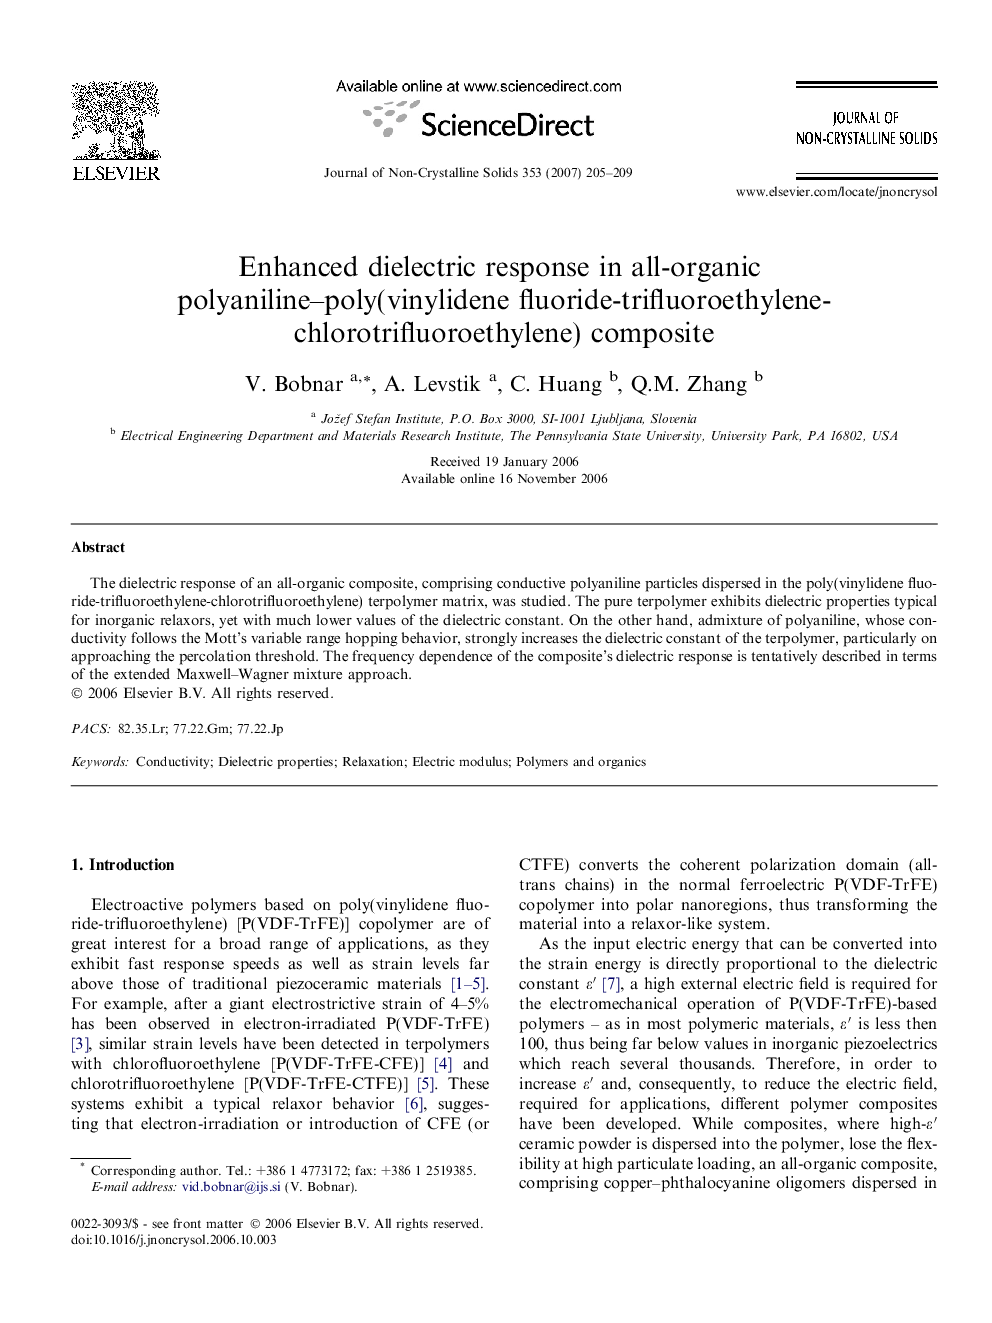 Enhanced dielectric response in all-organic polyaniline–poly(vinylidene fluoride-trifluoroethylene-chlorotrifluoroethylene) composite